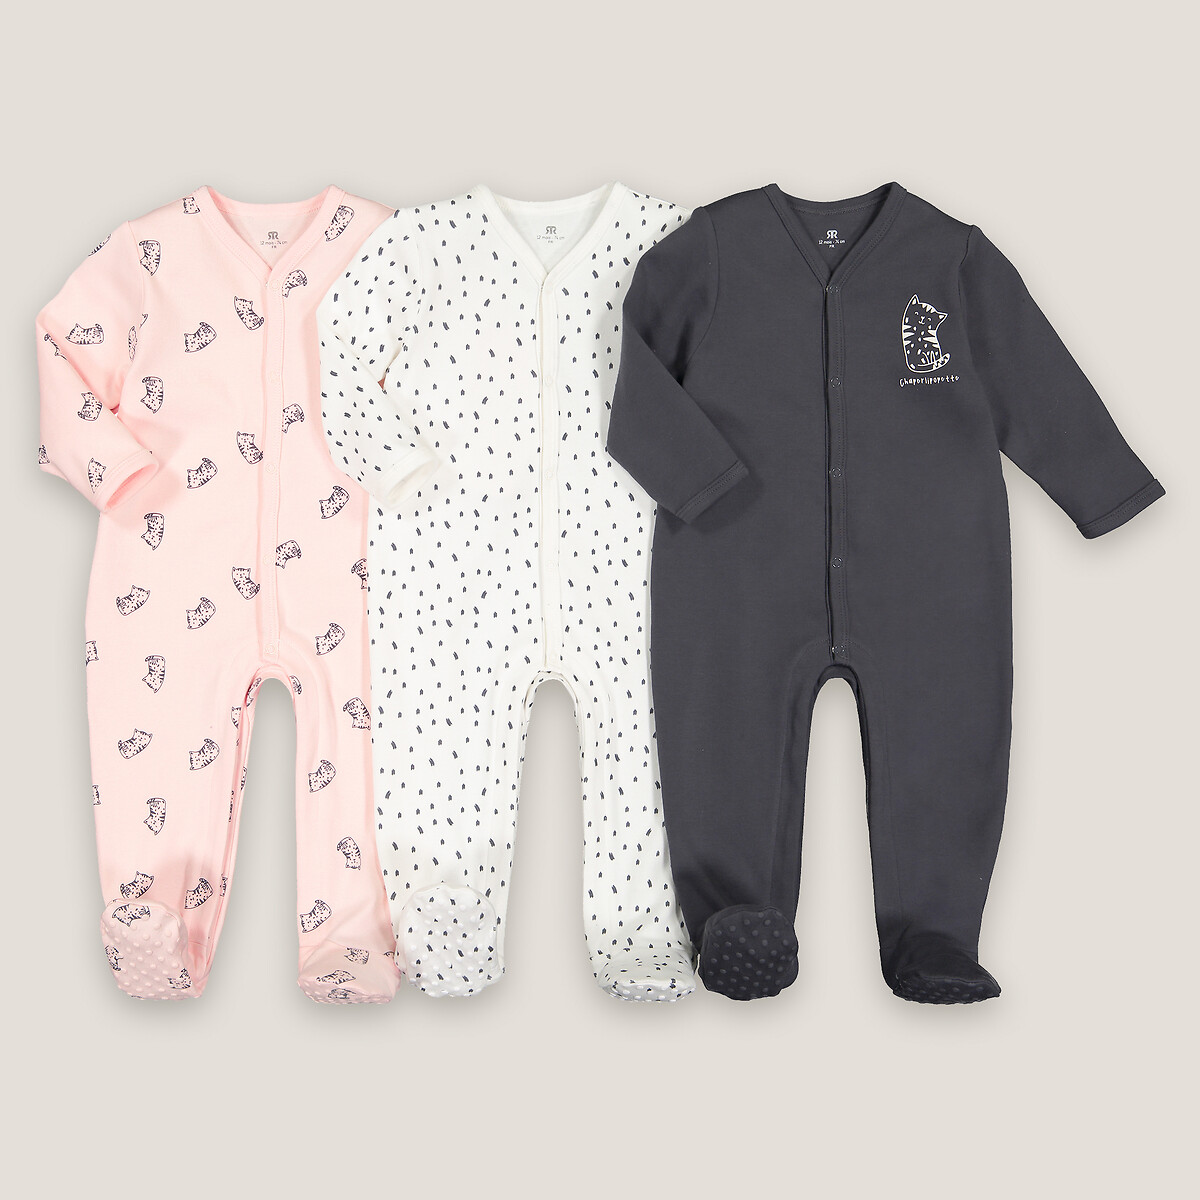 Baby Sleepsuit 3 Pack Girl Sleepsuit BABYGROWS 100% coton 